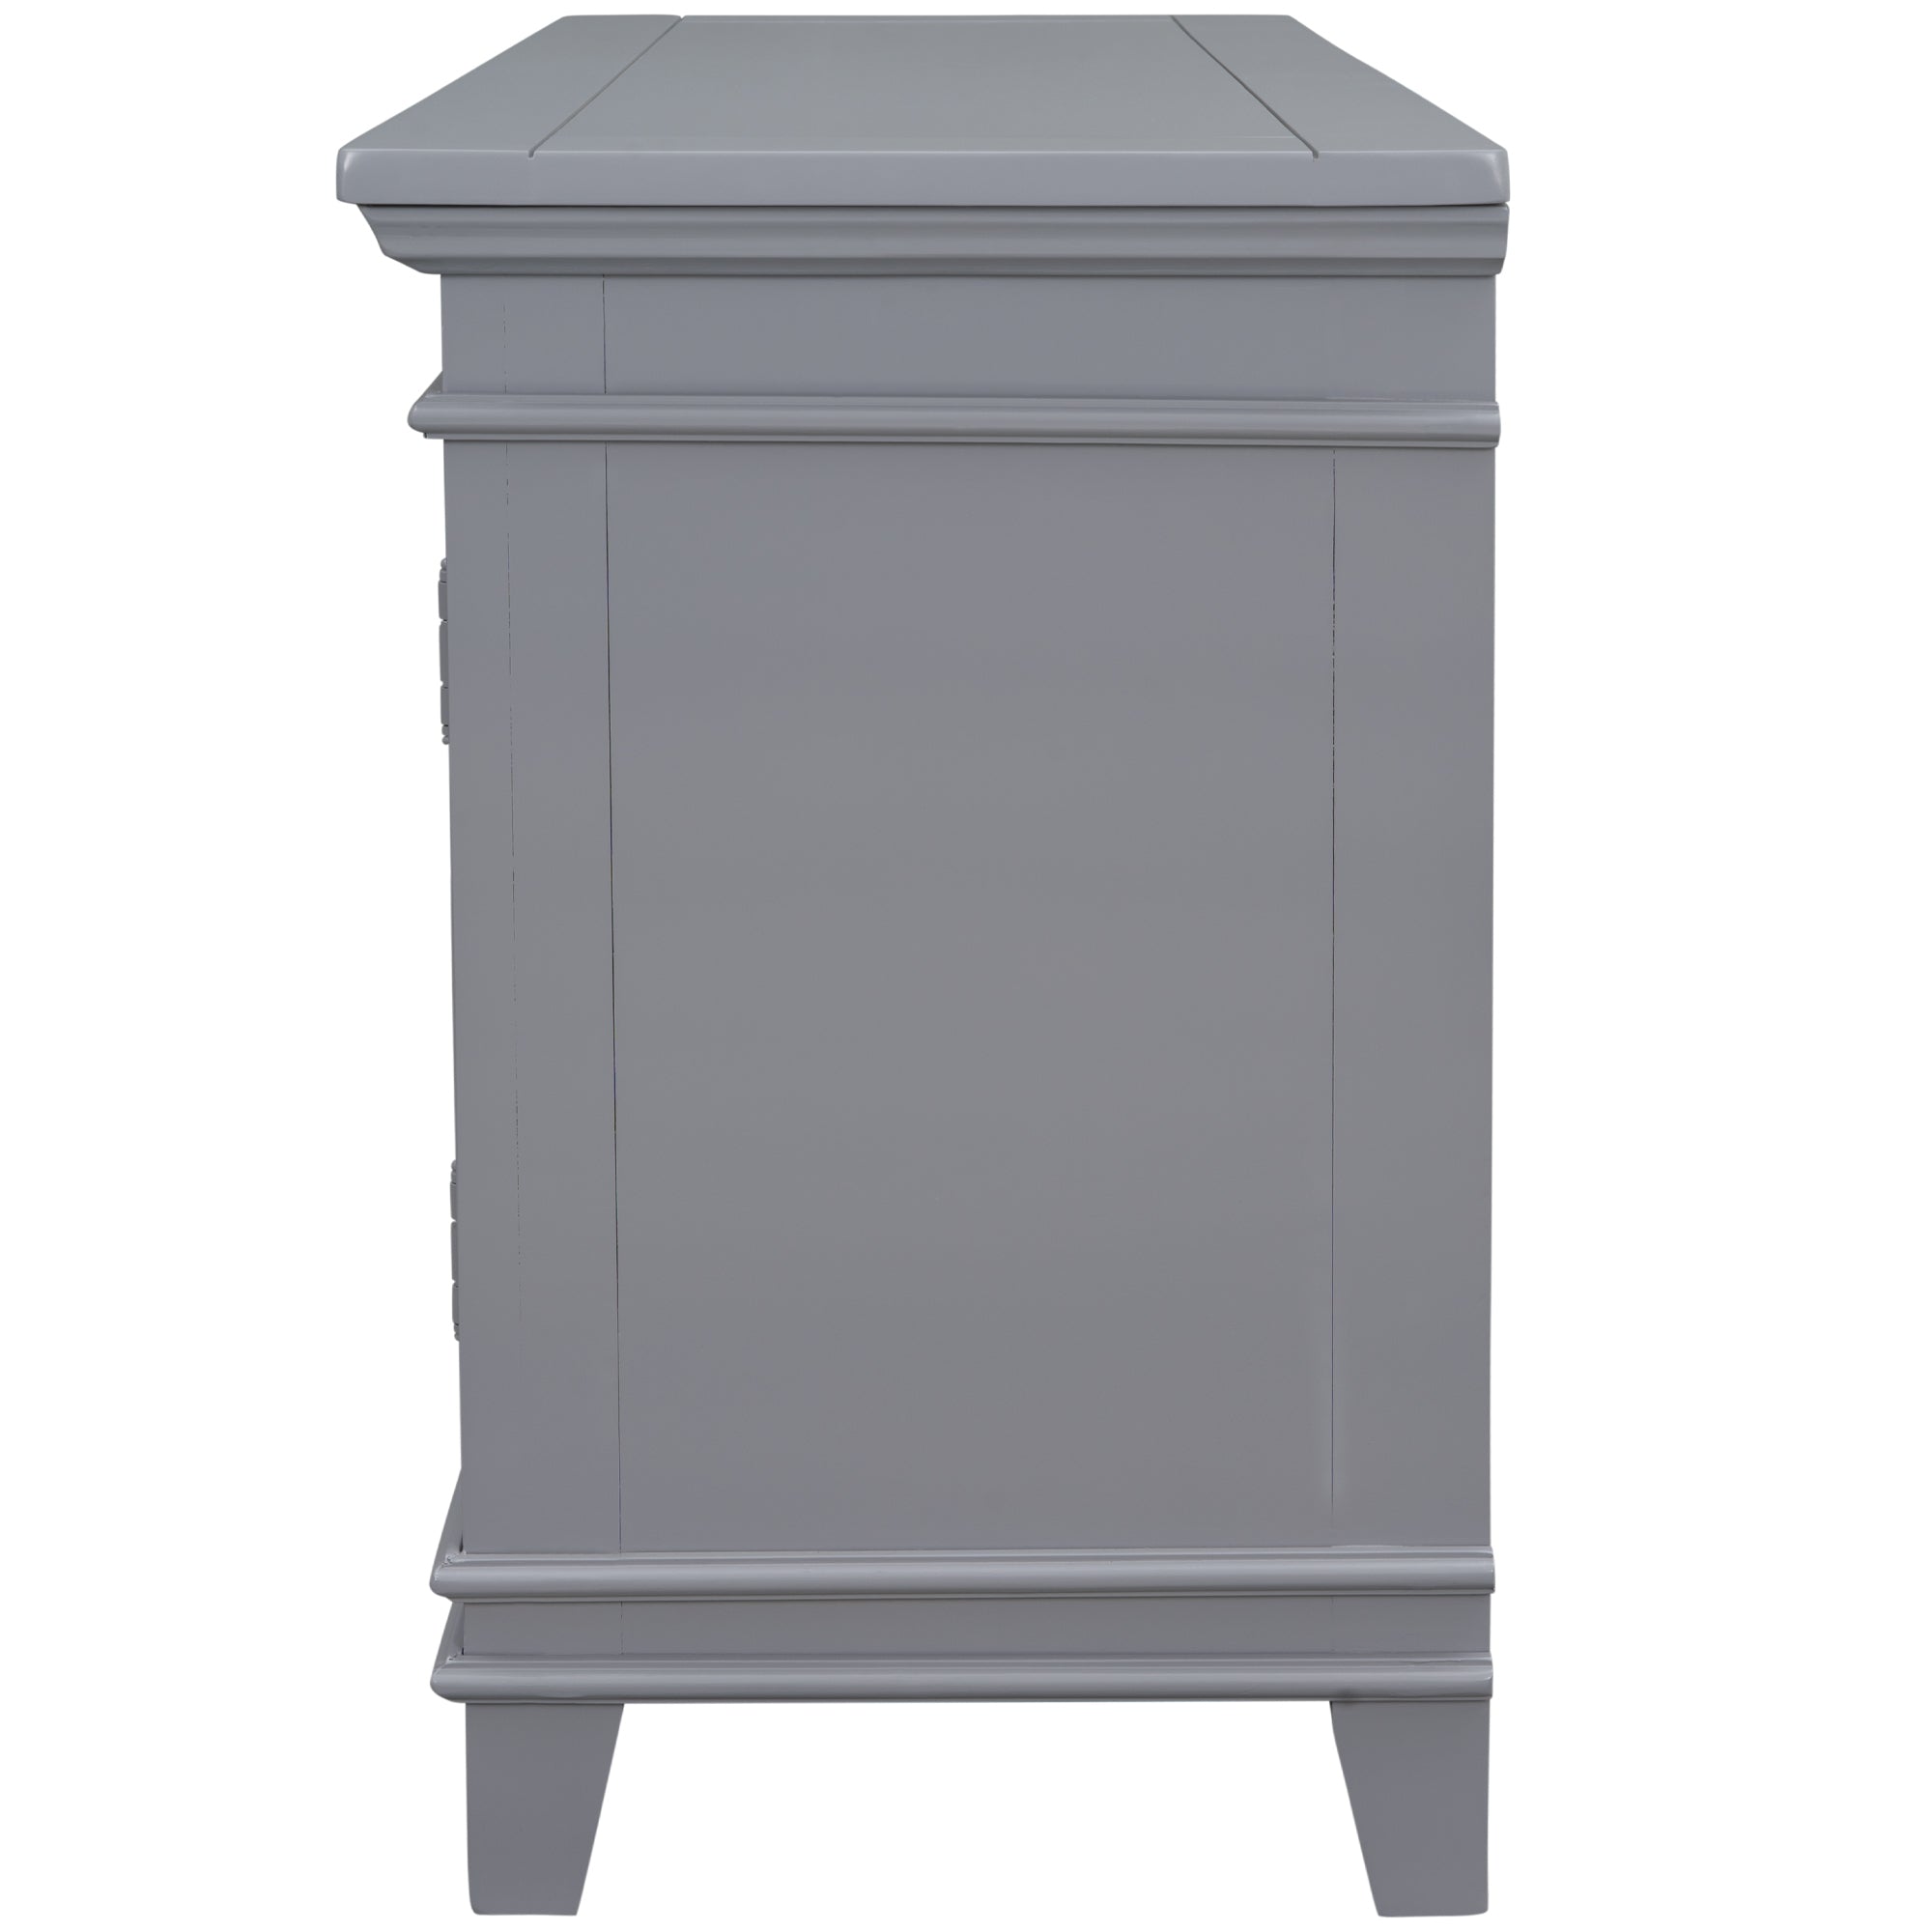 Accent Storage Cabinet Wooden Cabinet with Decorative Mirror Door (Gray)